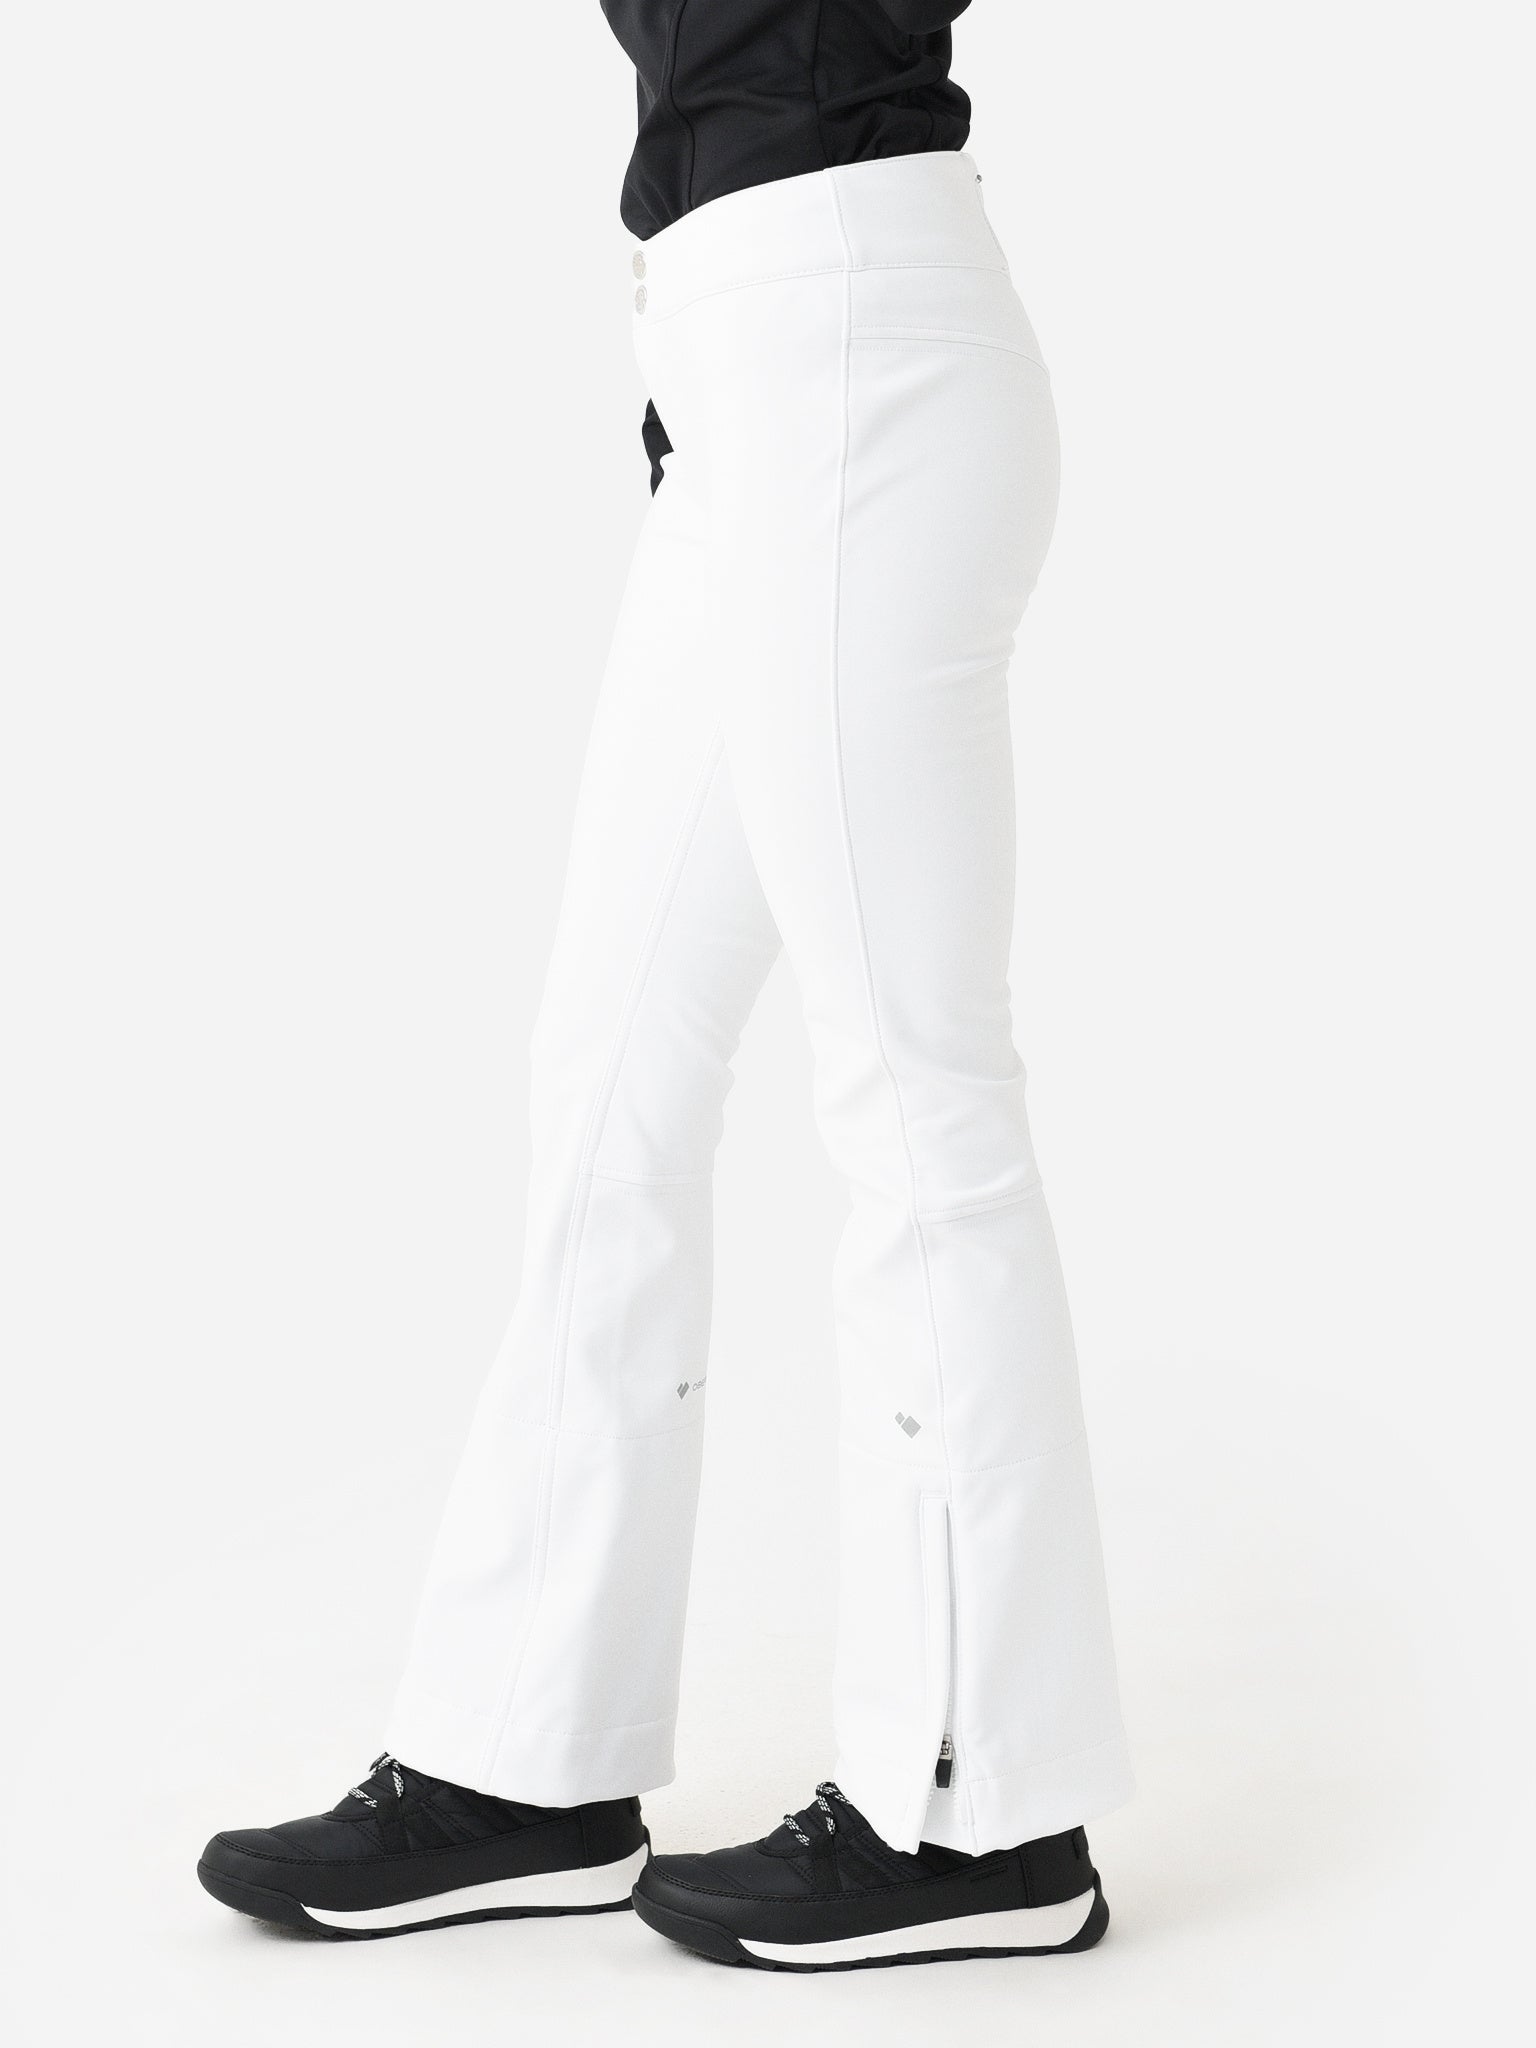 stretch ski pants white/black | 36 | 495800/01/36